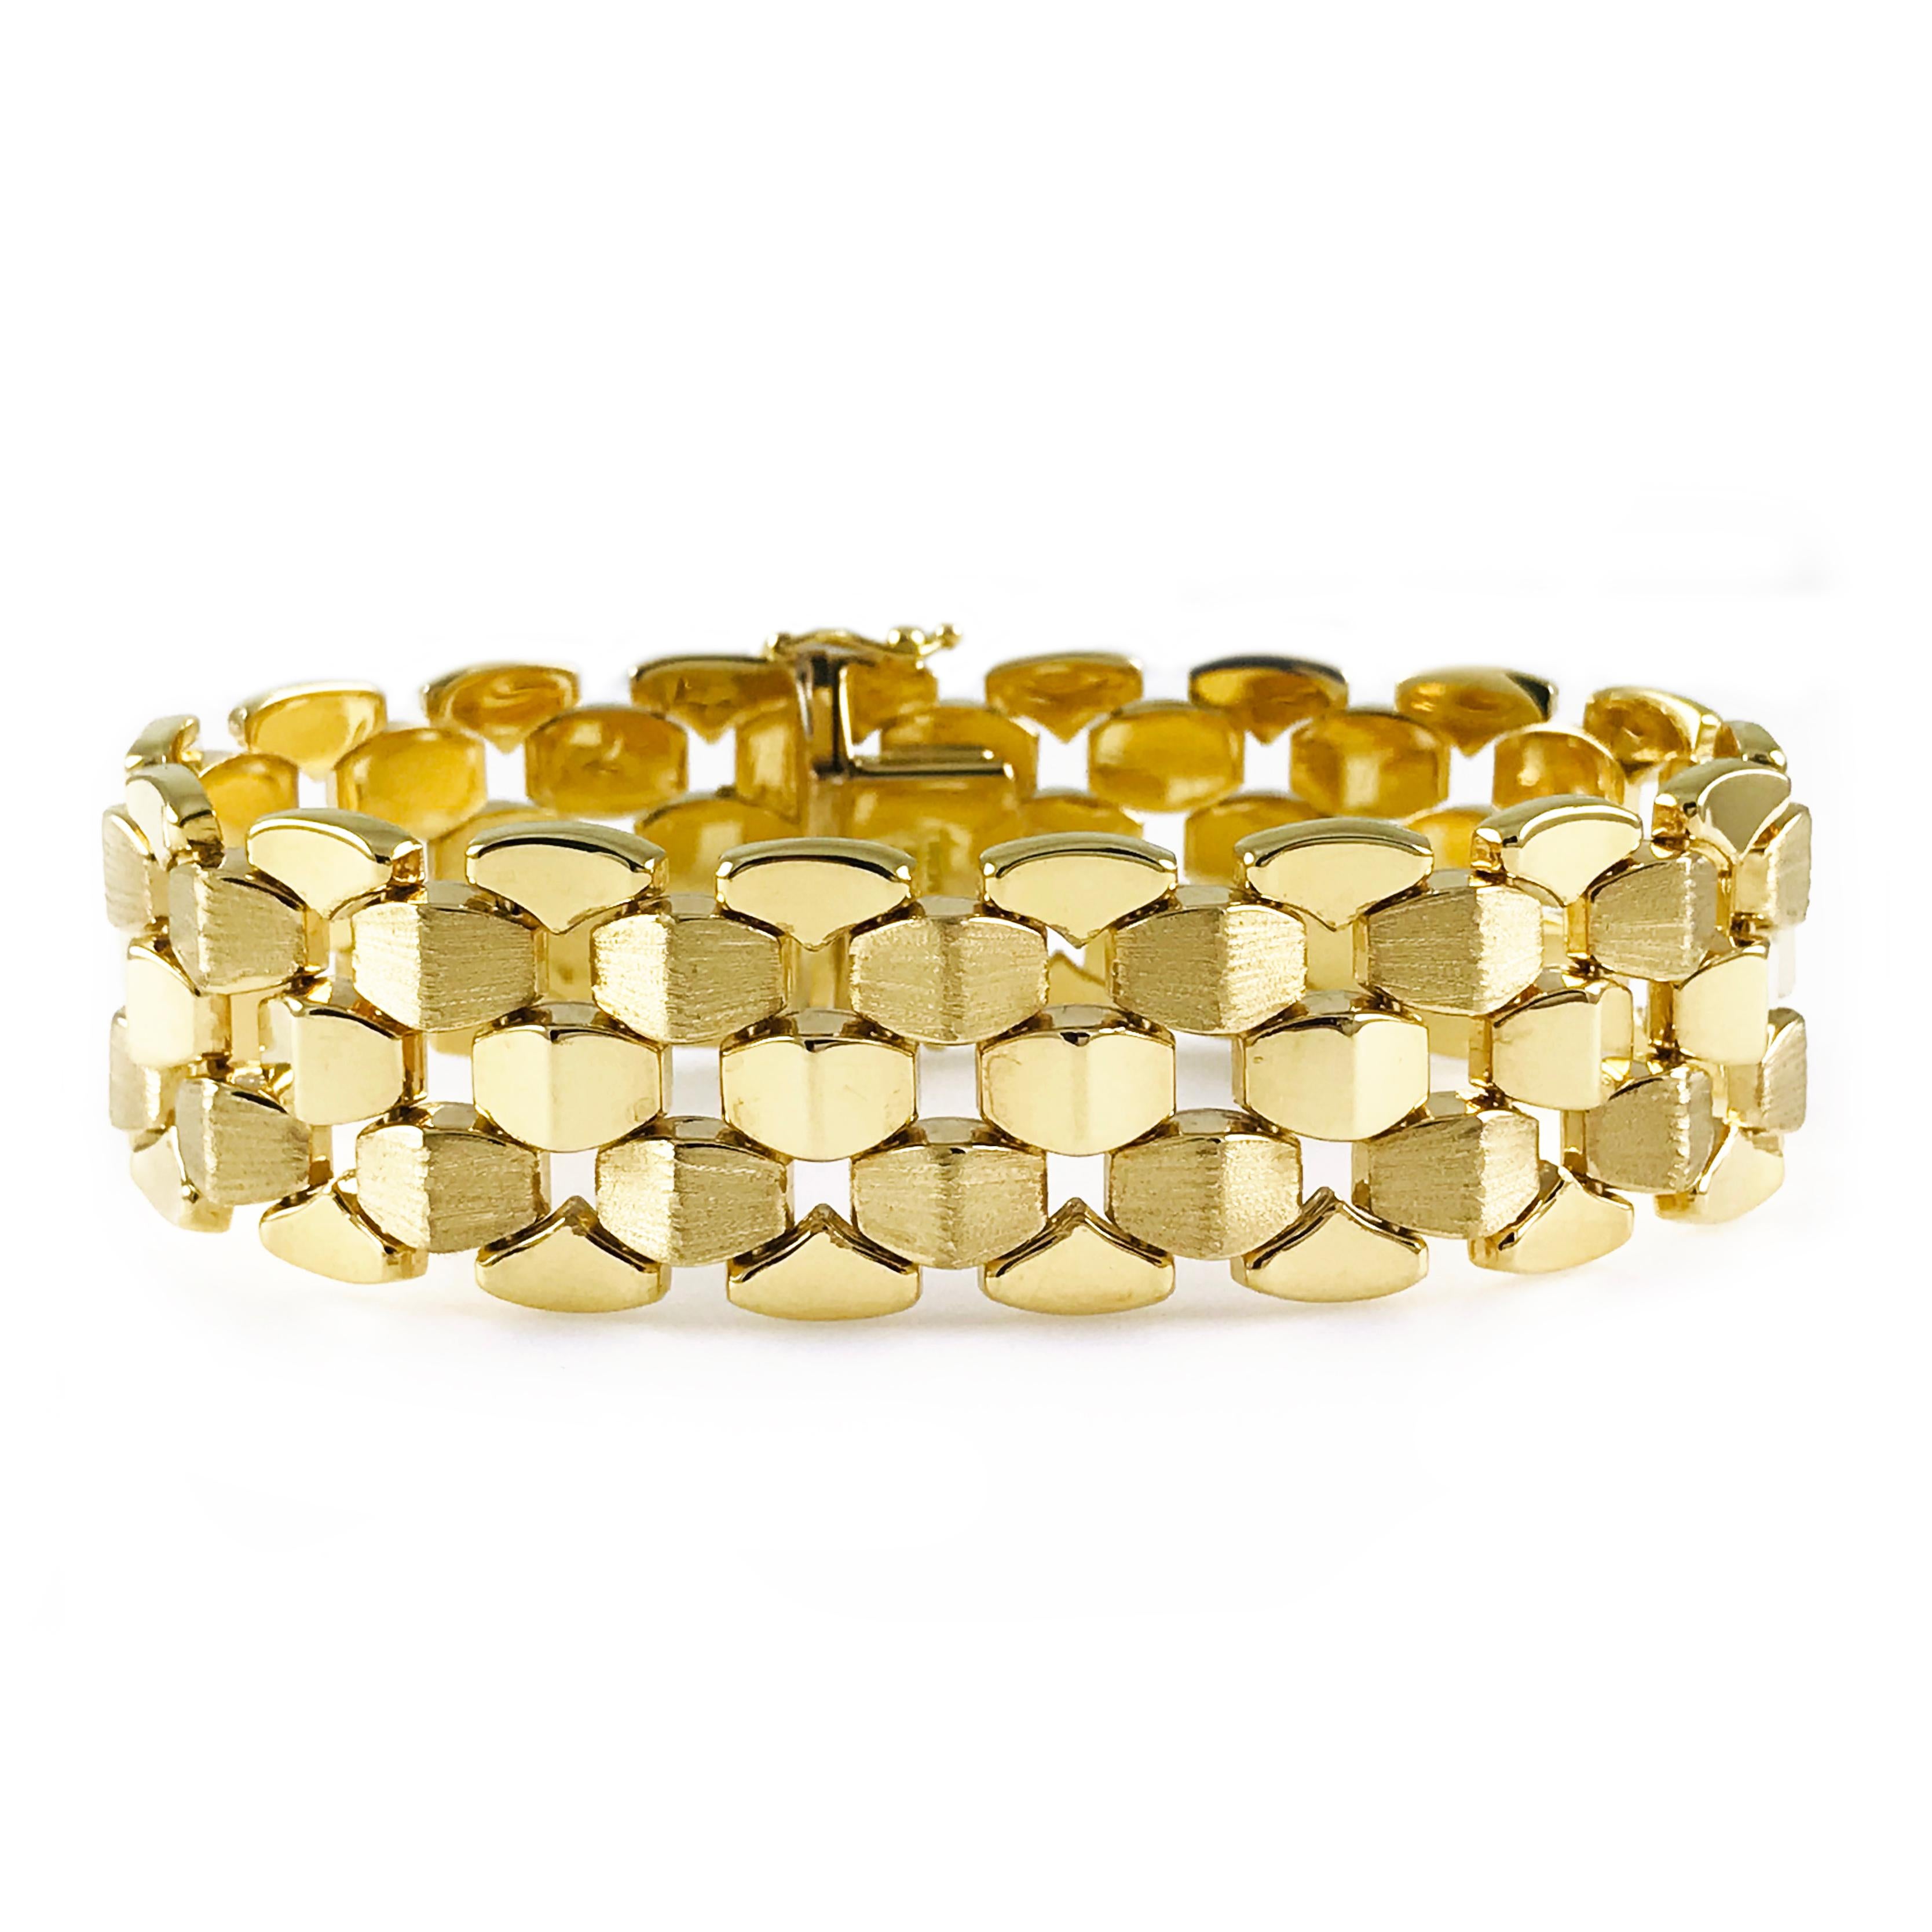 Vintage 18K Yellow Gold Italian Milros Multi-Textured Bracelet. This bold yet elegant wide band bracelet shines abundantly with stately luxury. Hallmark on clasp states 14k Italy Milros. 